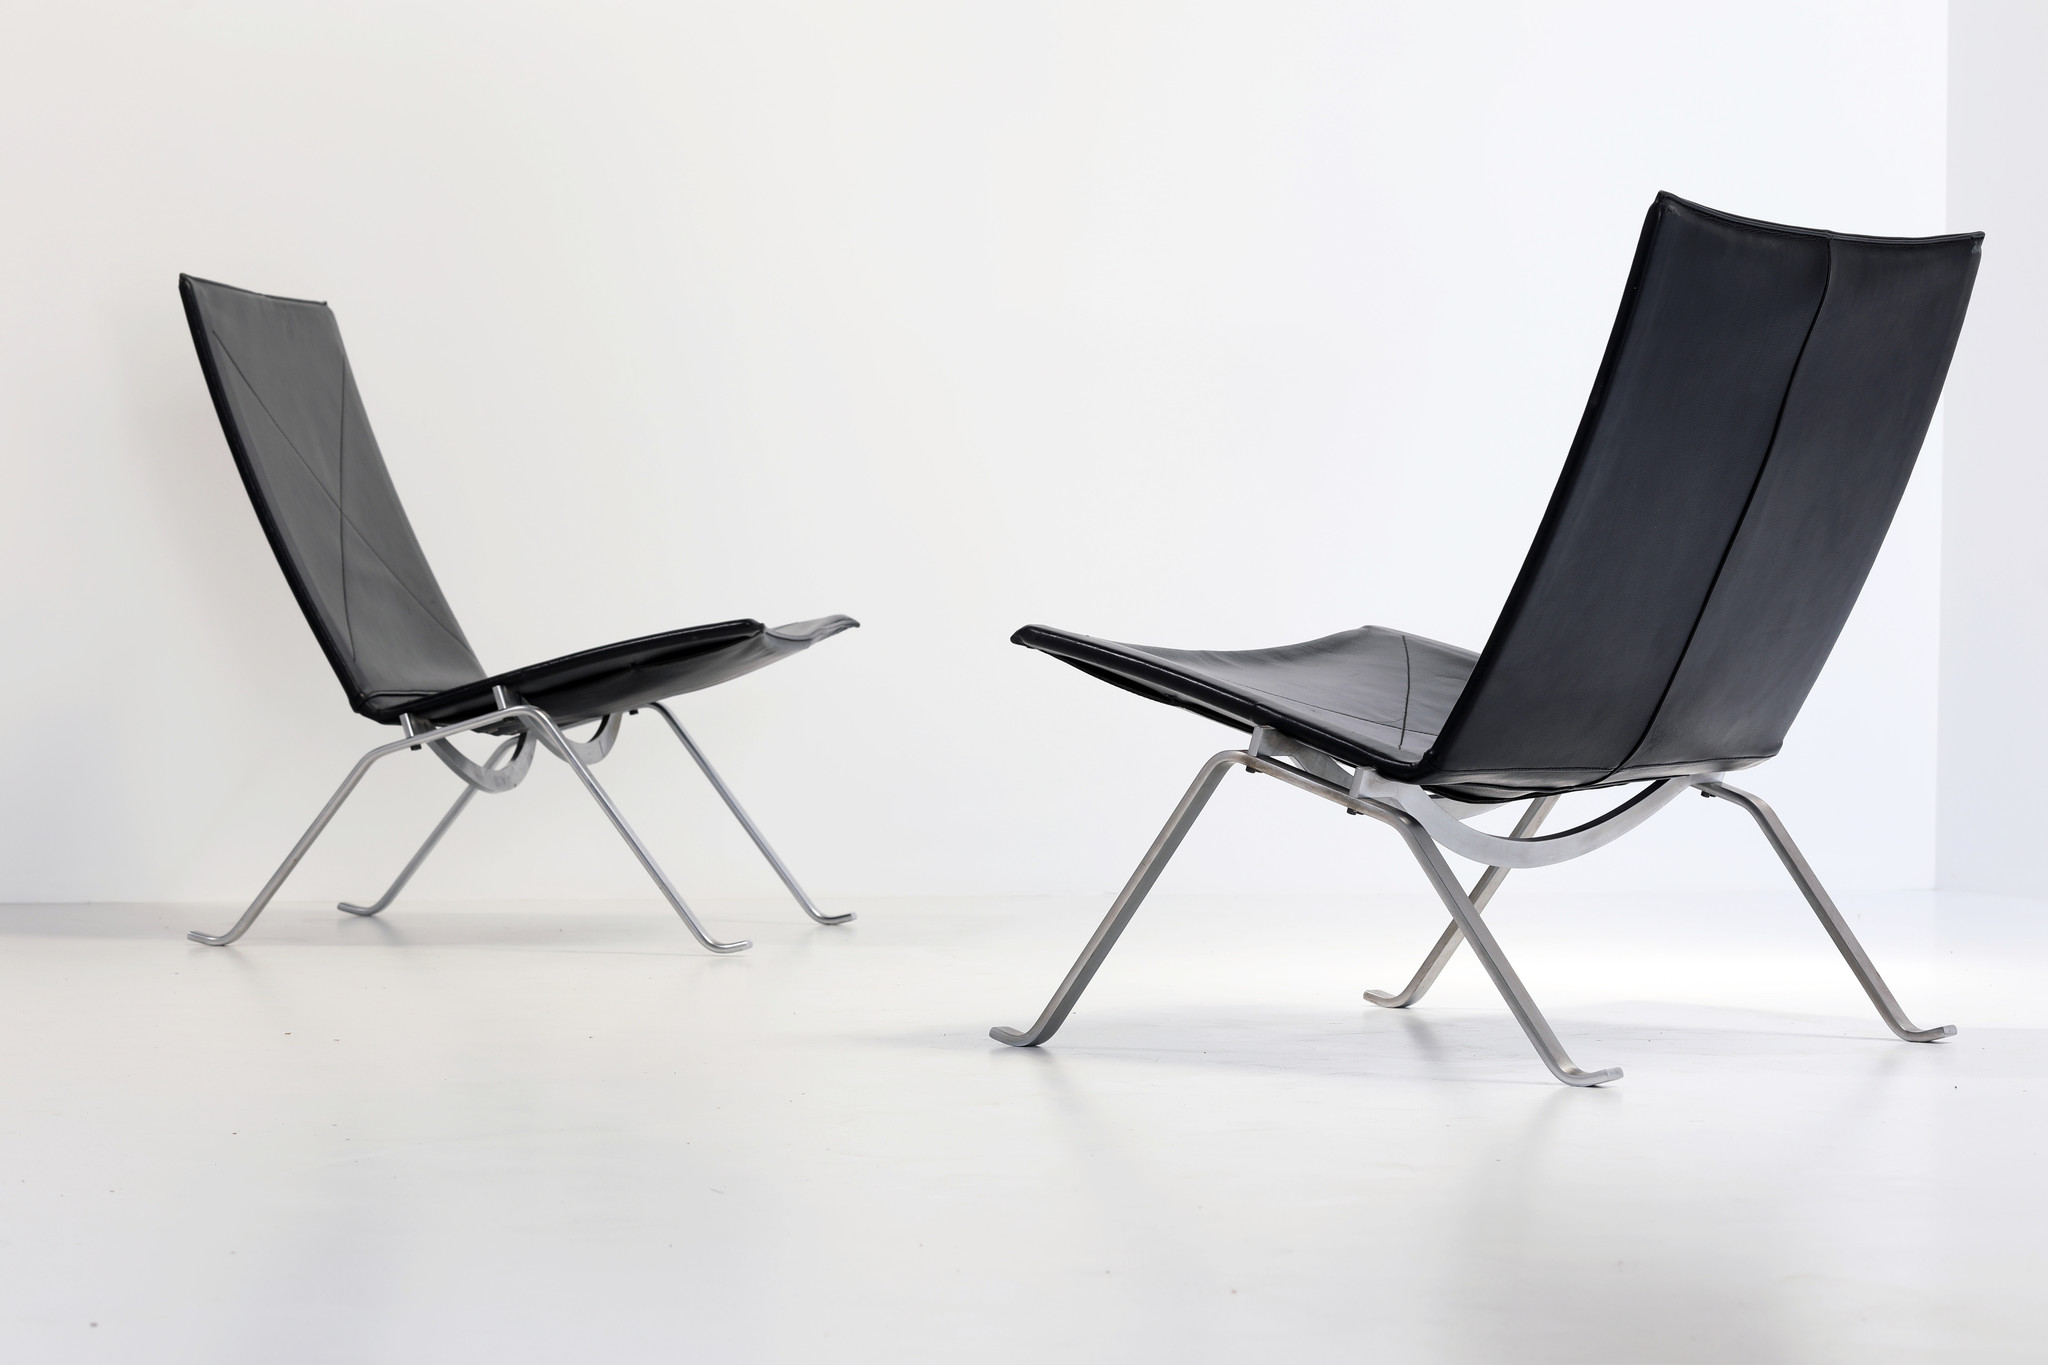 Set PK22 chairs by POUL KJÆRHOLM for Fritz Hansen